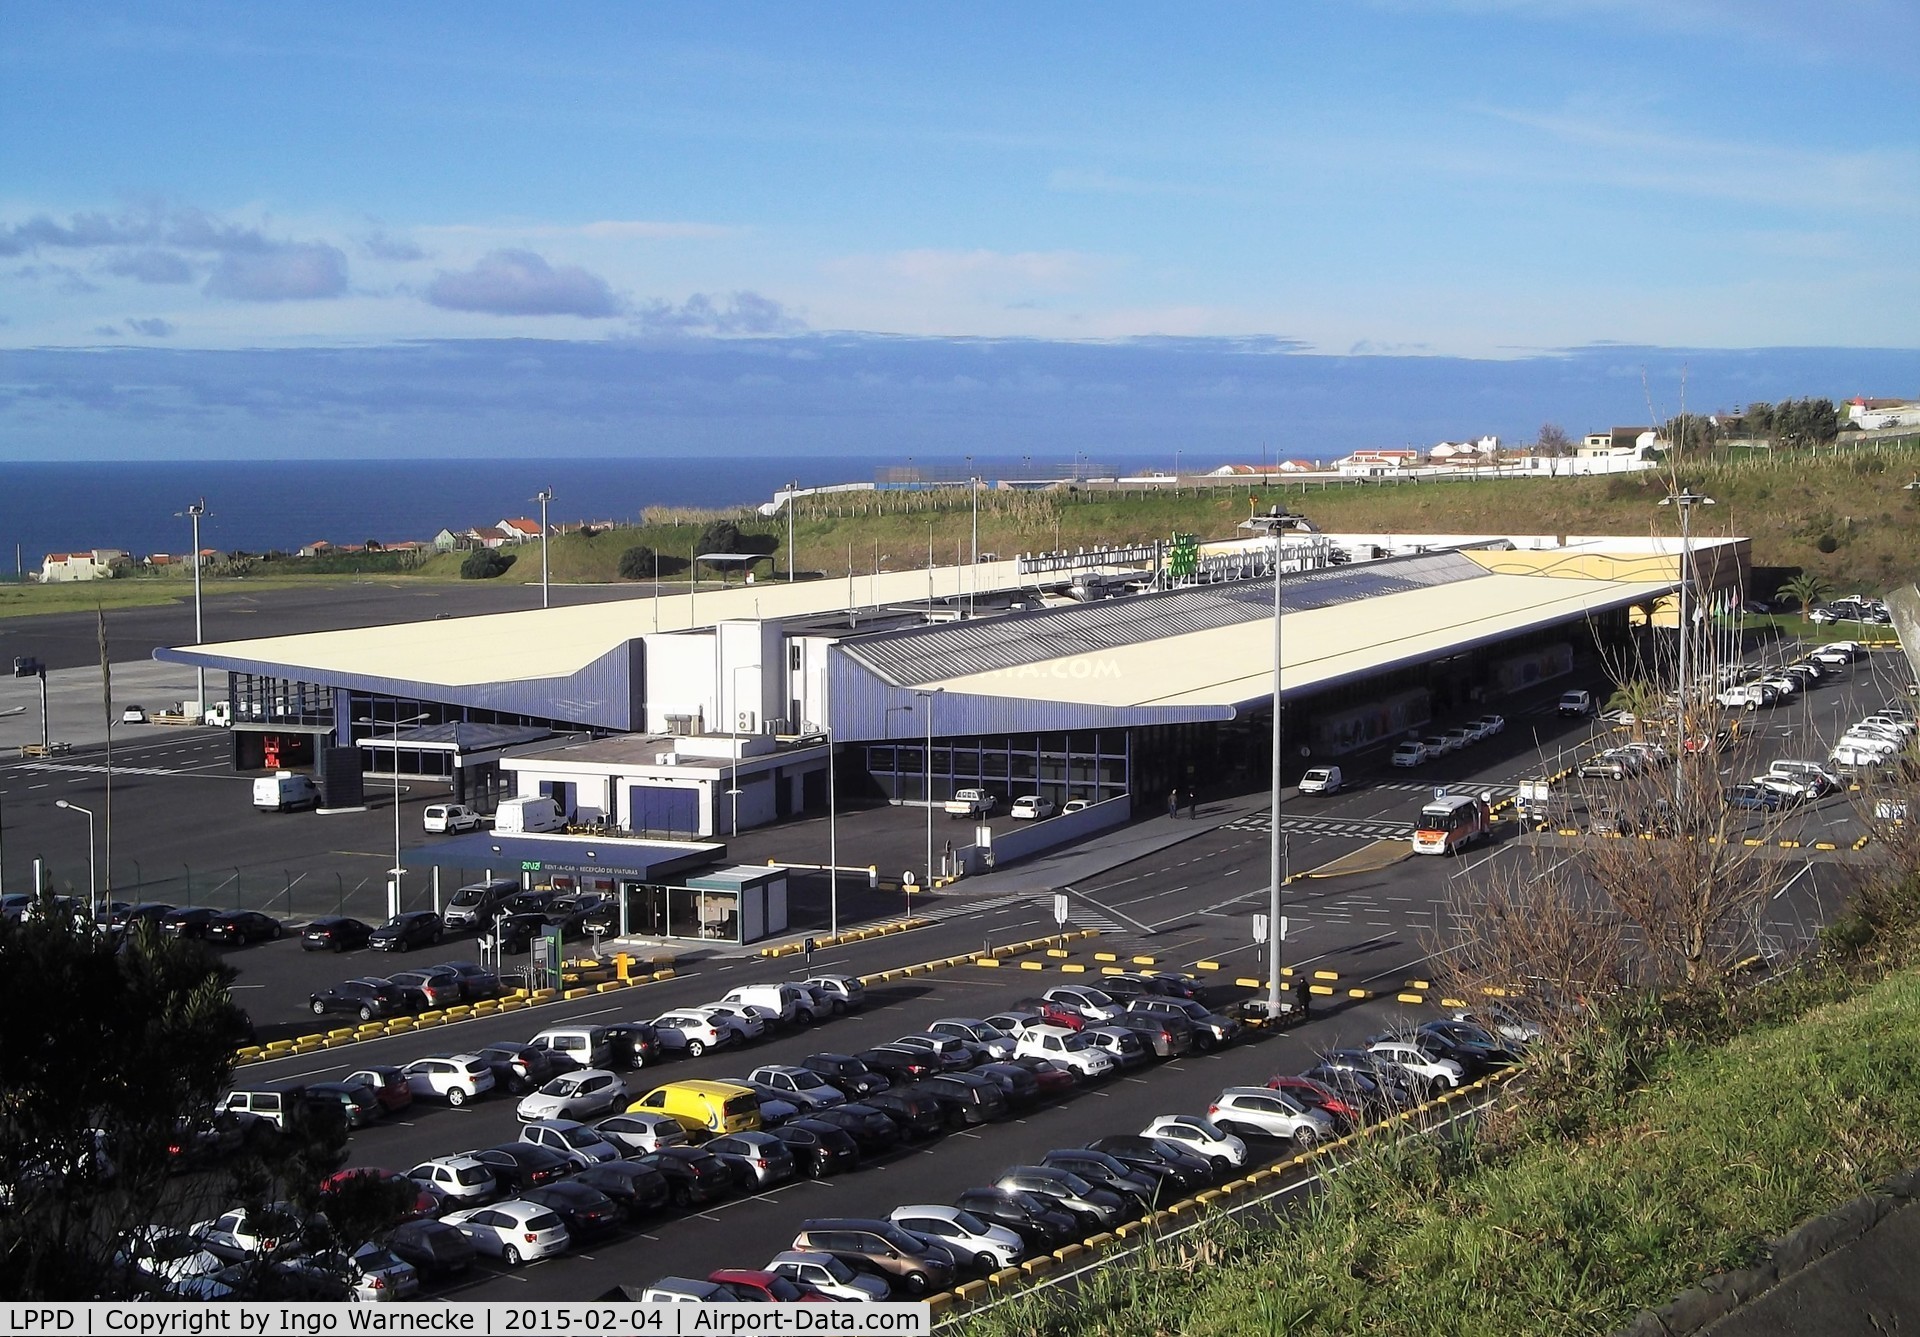 João Paulo II Airport, Ponta Delgada, São Miguel Island Portugal (LPPD) - terminal at Ponta Delgada airport